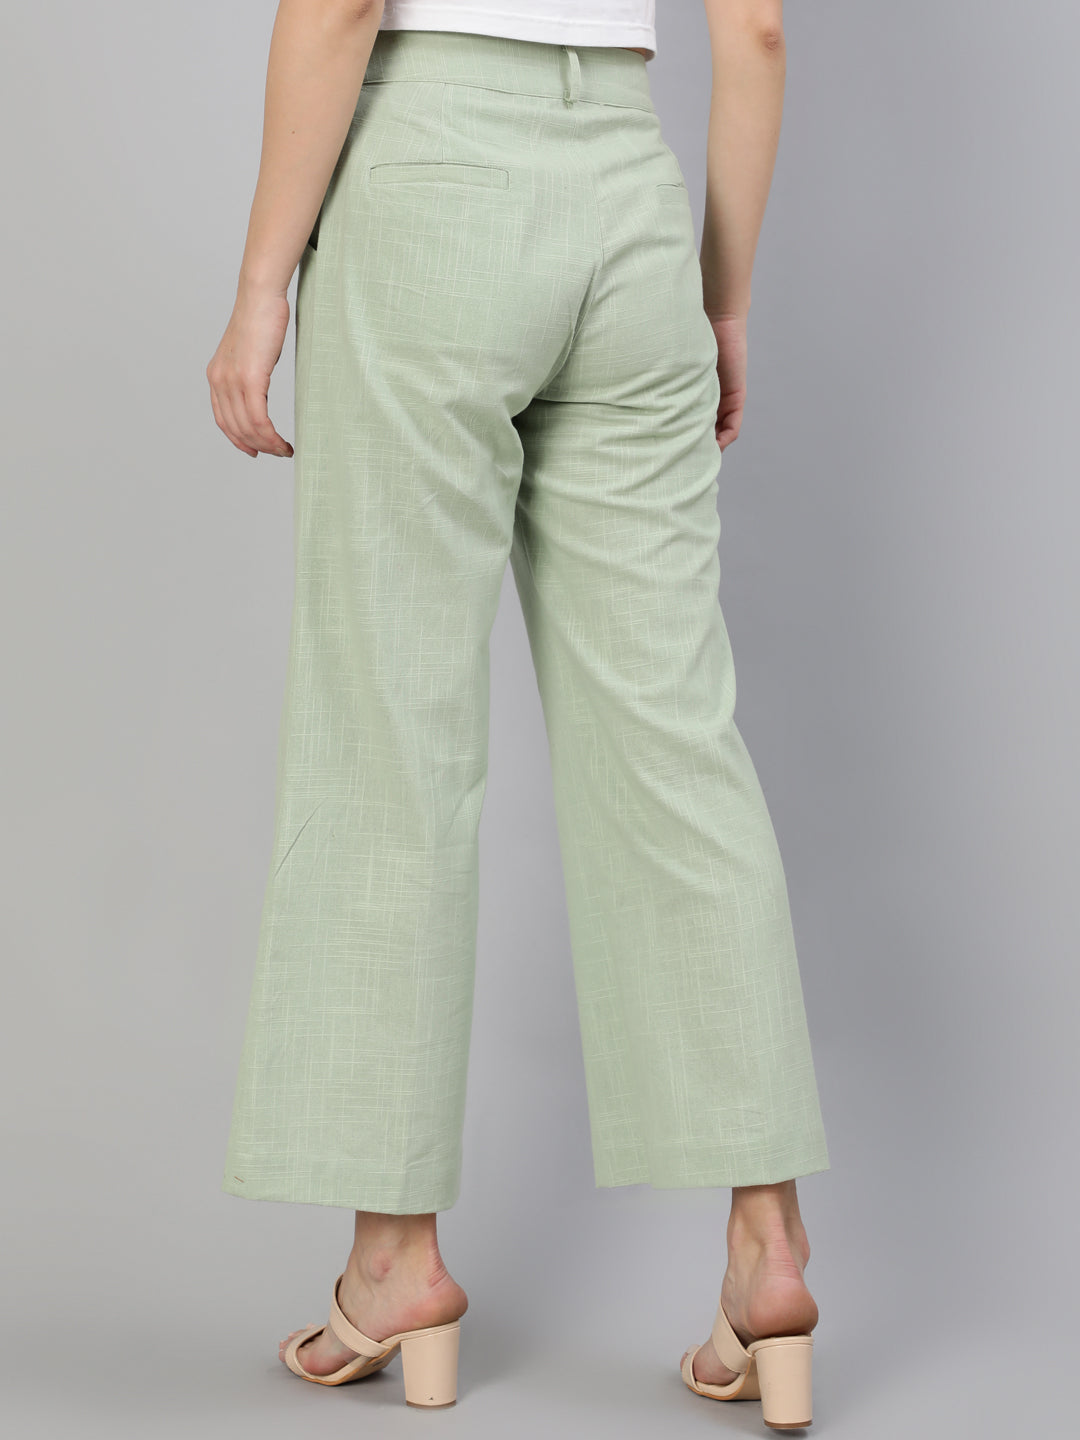 Shop parallel pants with crop top